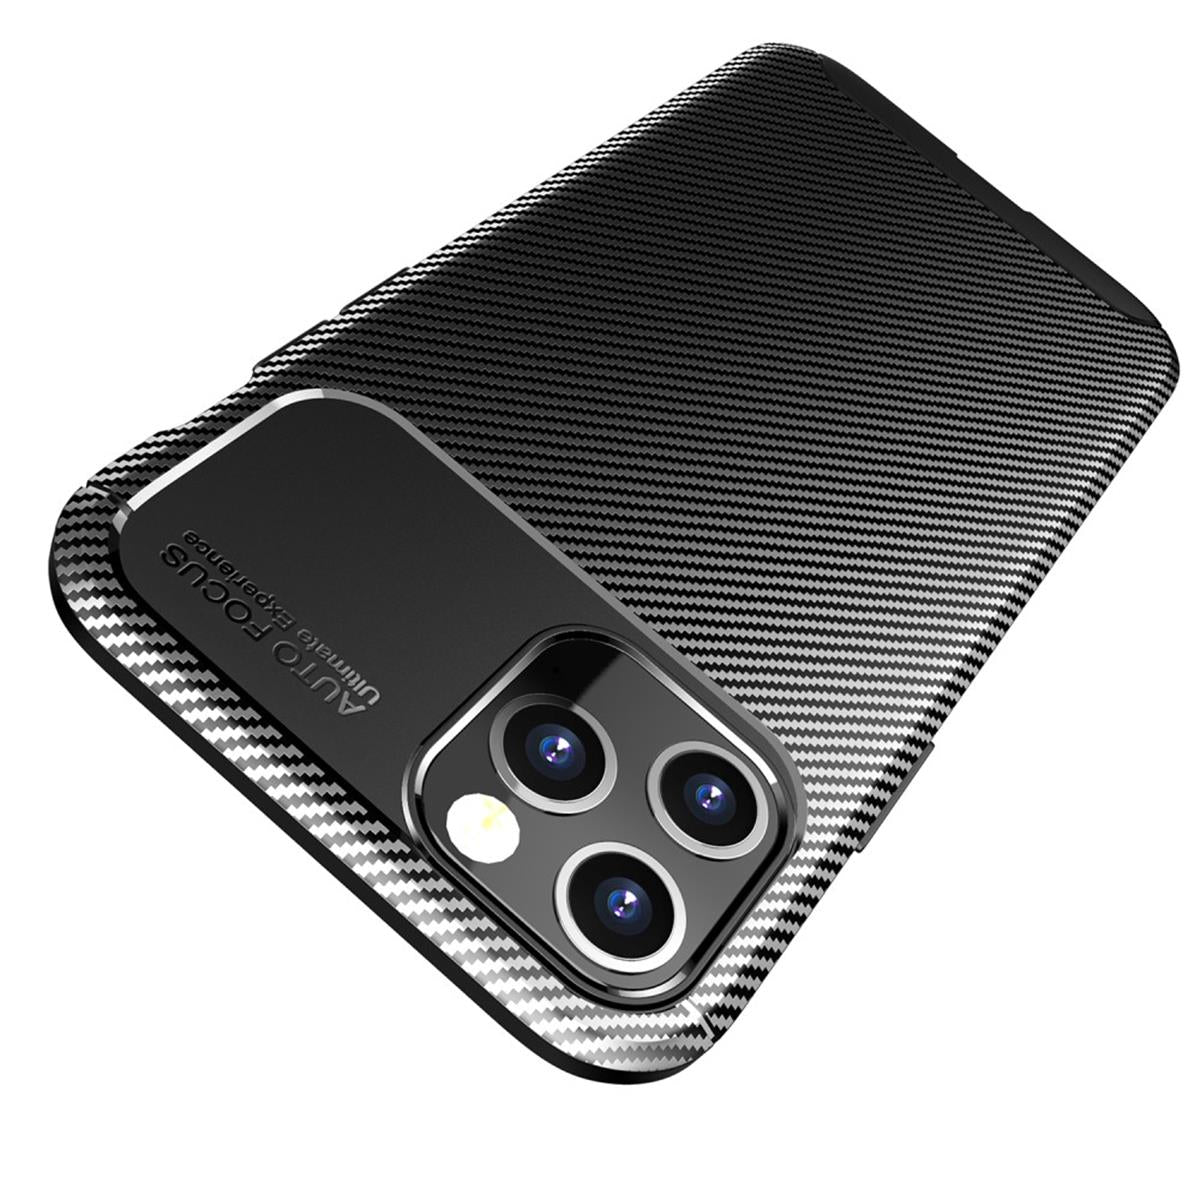 Hülle für Apple iPhone 12 Pro Max Handyhülle Silikon Case Cover Carbonfarben